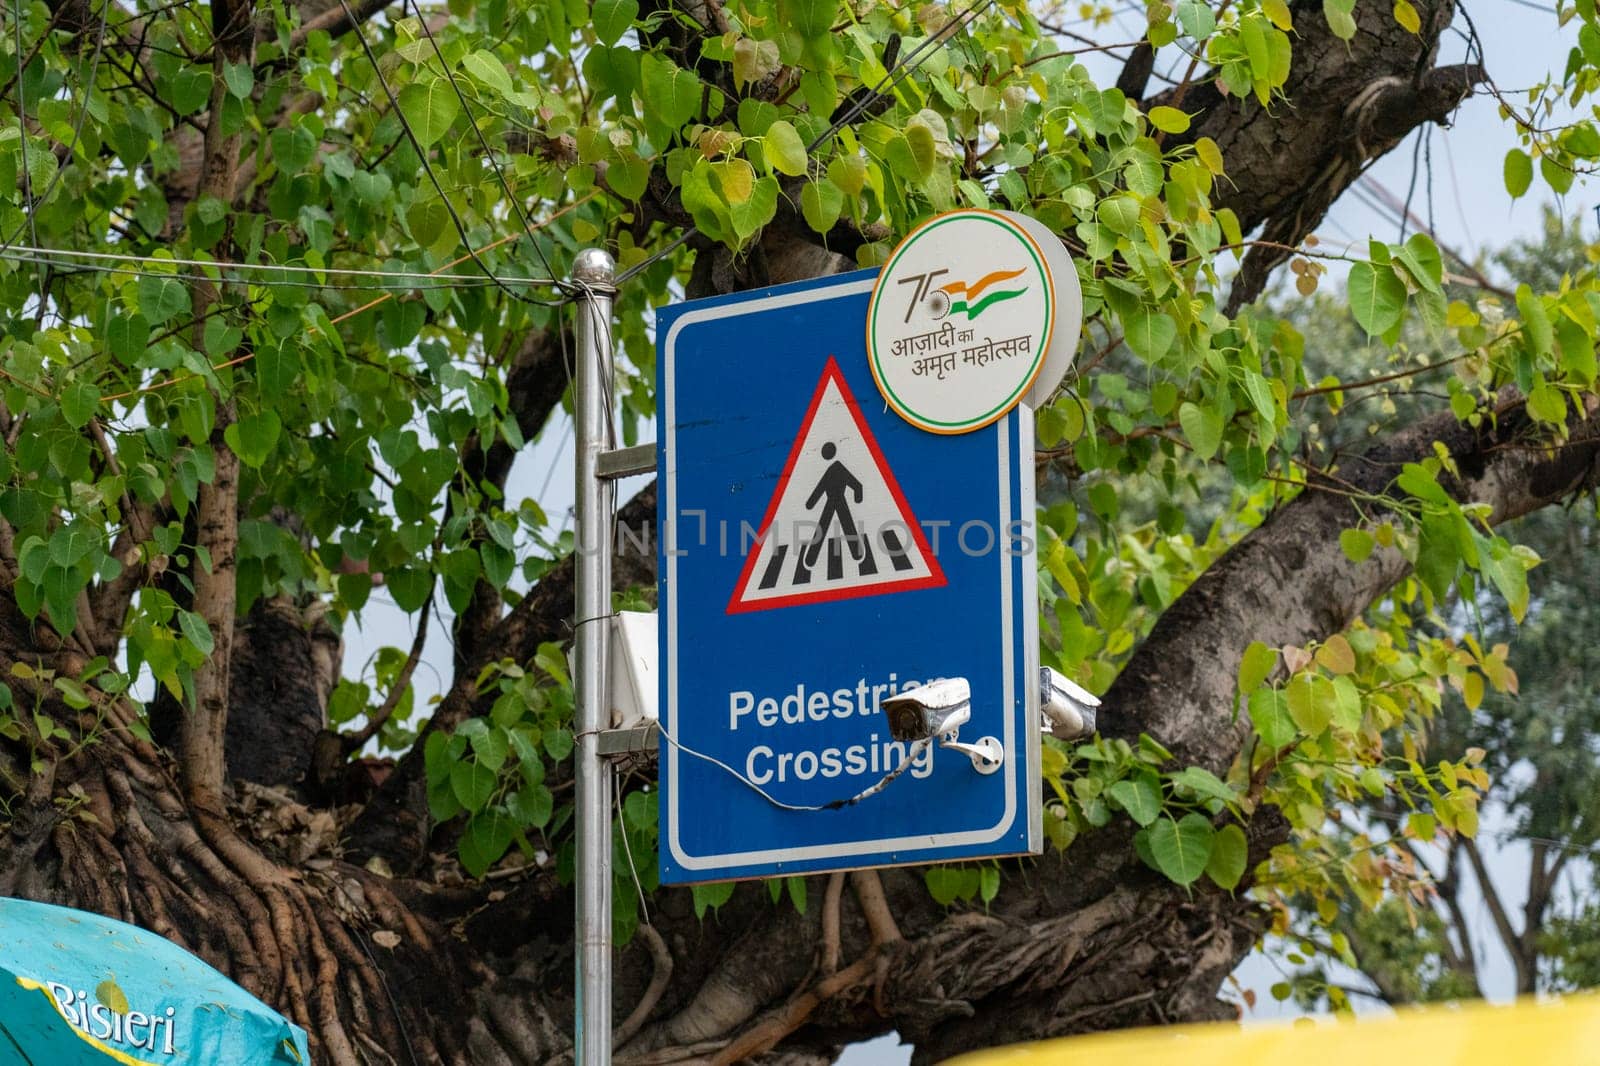 Pedestrian Crossing sign in Old Delhi, India by oliverfoerstner